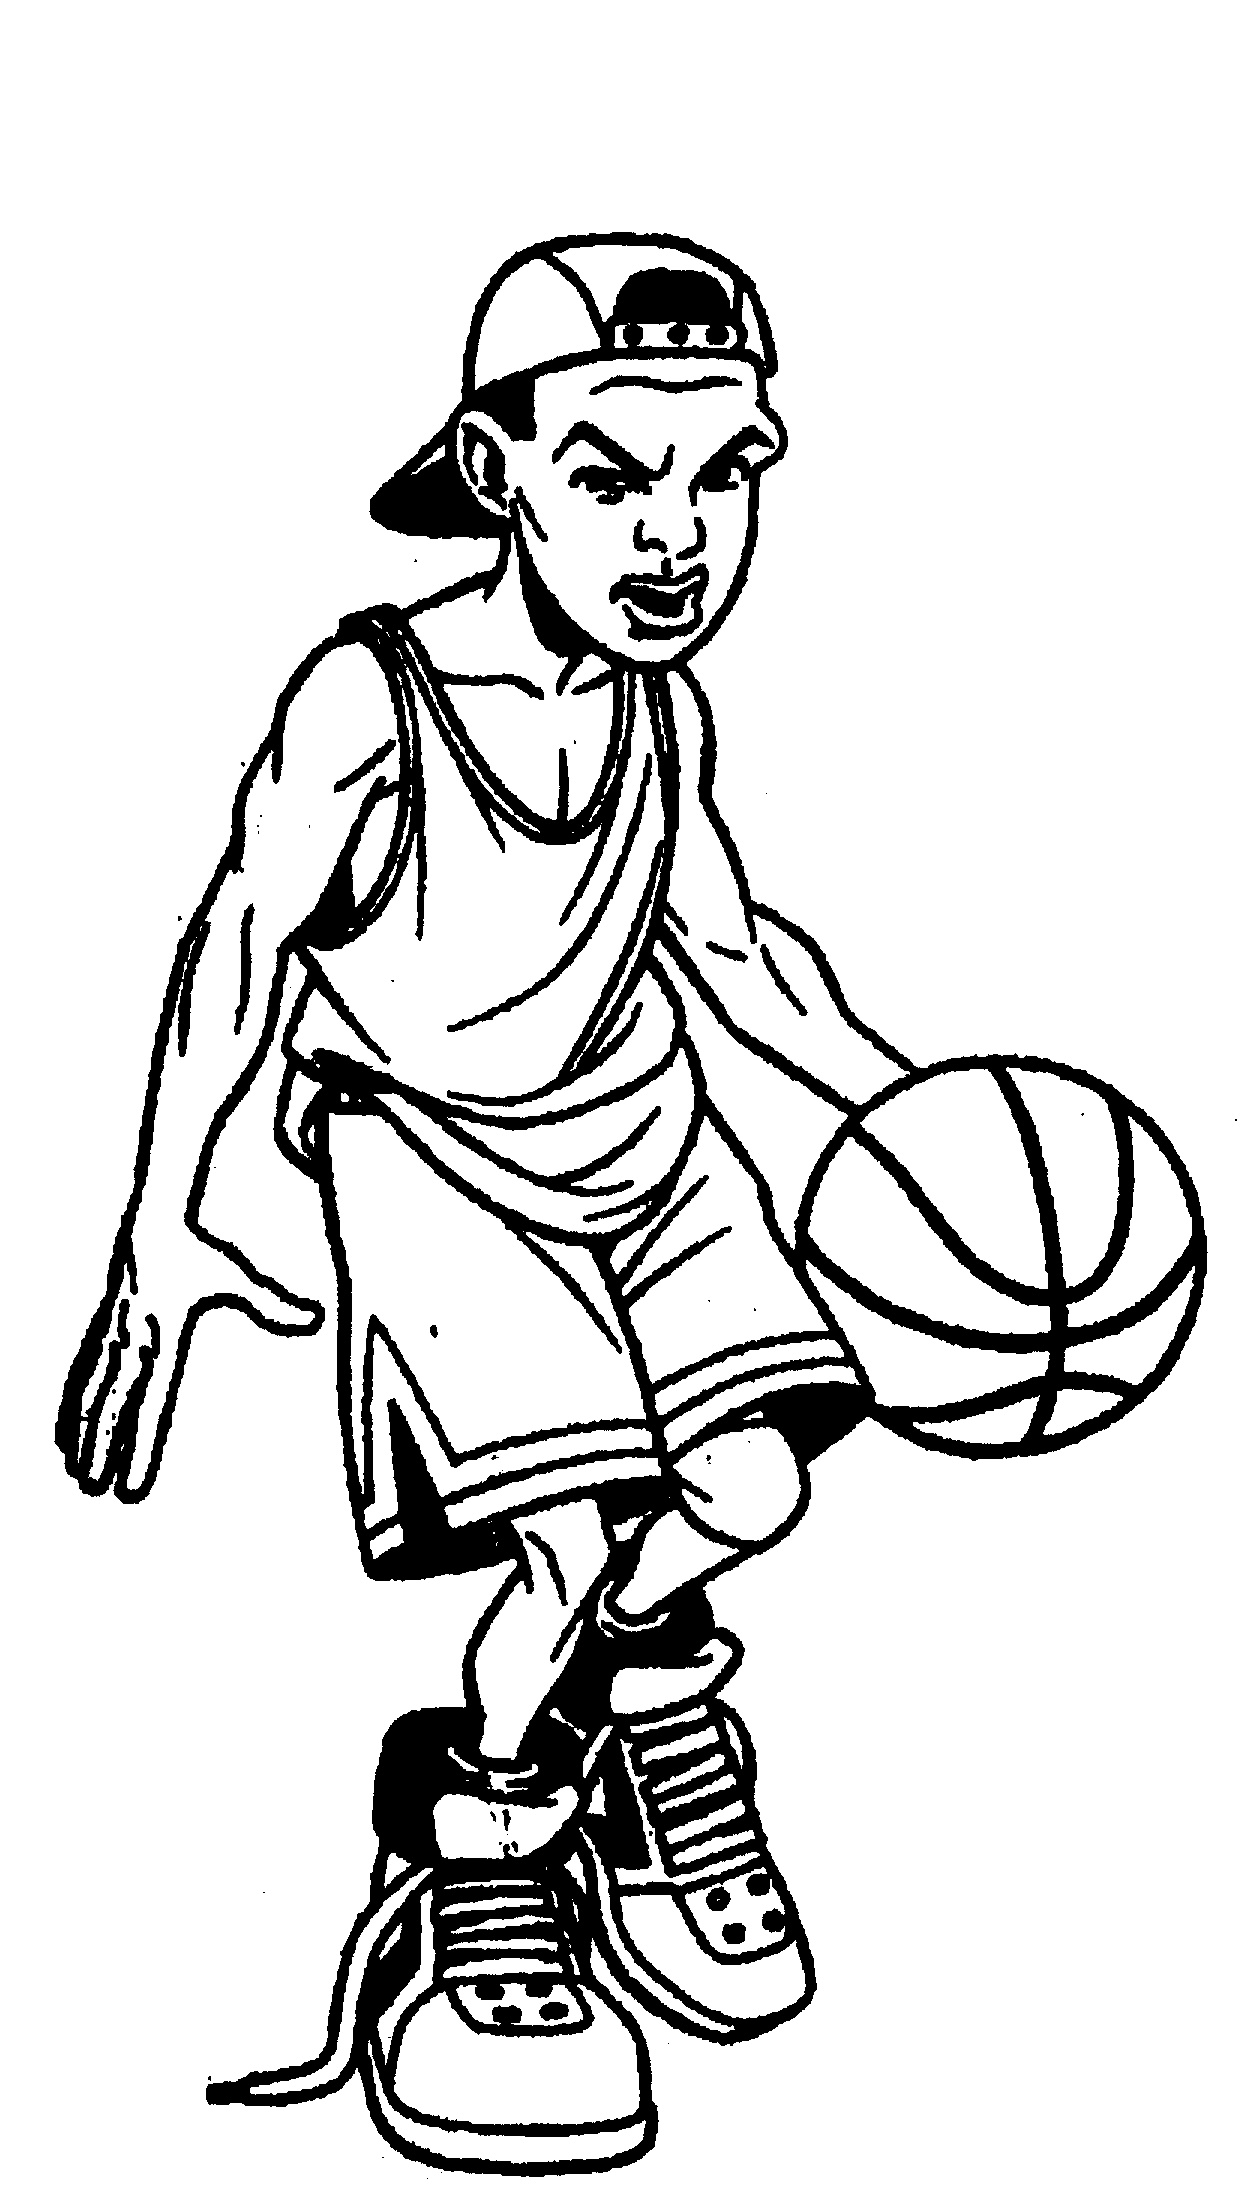 Free Basketball Drawing, Download Free Basketball Drawing png images